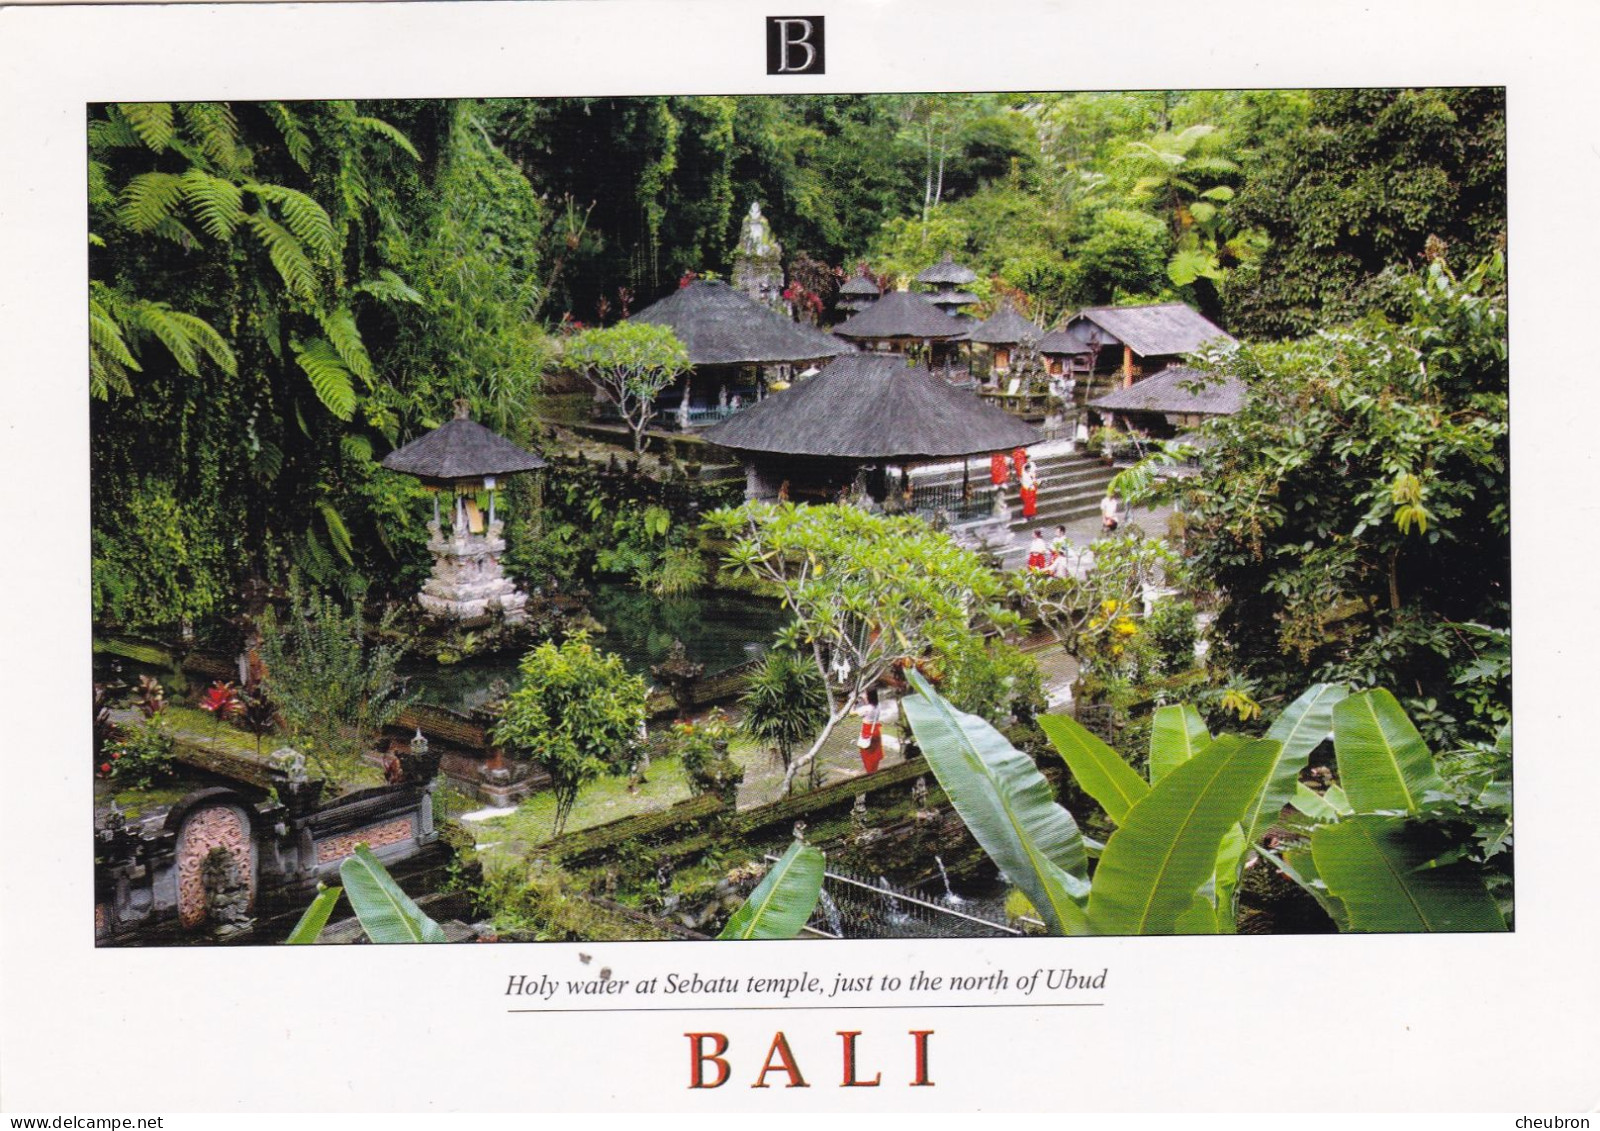 INDONESIE. BALI (ENVOYE DE). " HOLI WATER  AT SEBATU TEMPLE  ".ANNEE 2009 + TEXTE + TIMBRES. FORMAT 16.5x11.5 Cm - Indonesia